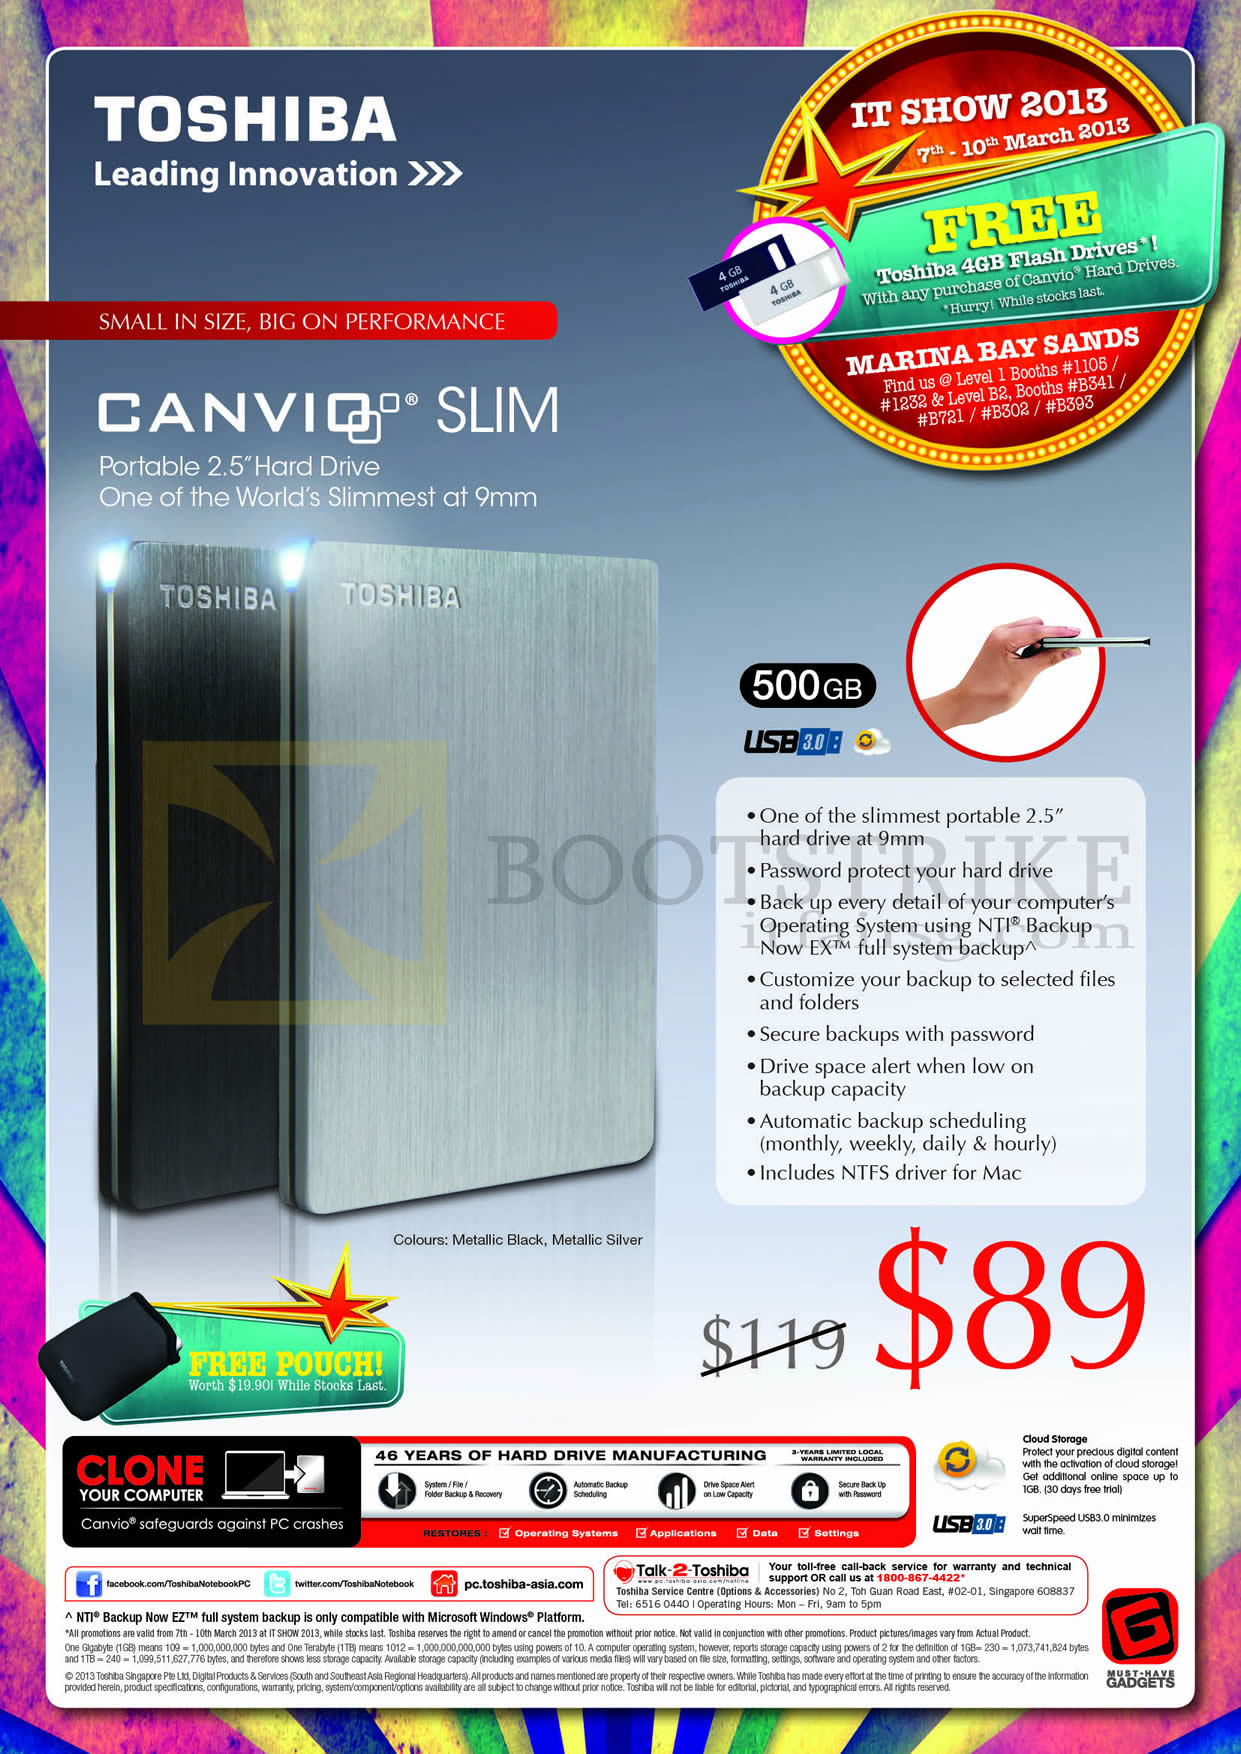 IT SHOW 2013 price list image brochure of Toshiba External Storage Canvio Slim 500GB